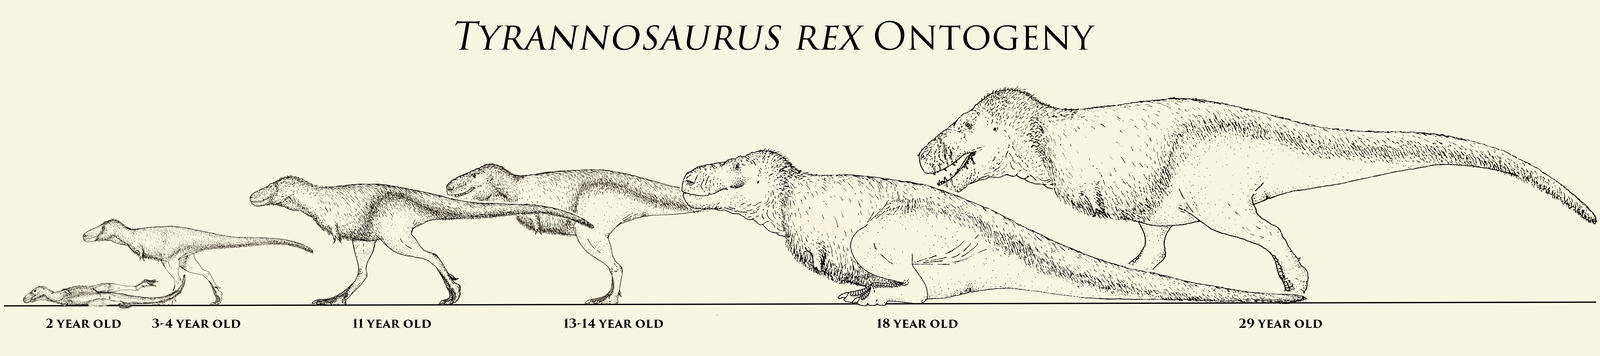 T. rex Ontogeny